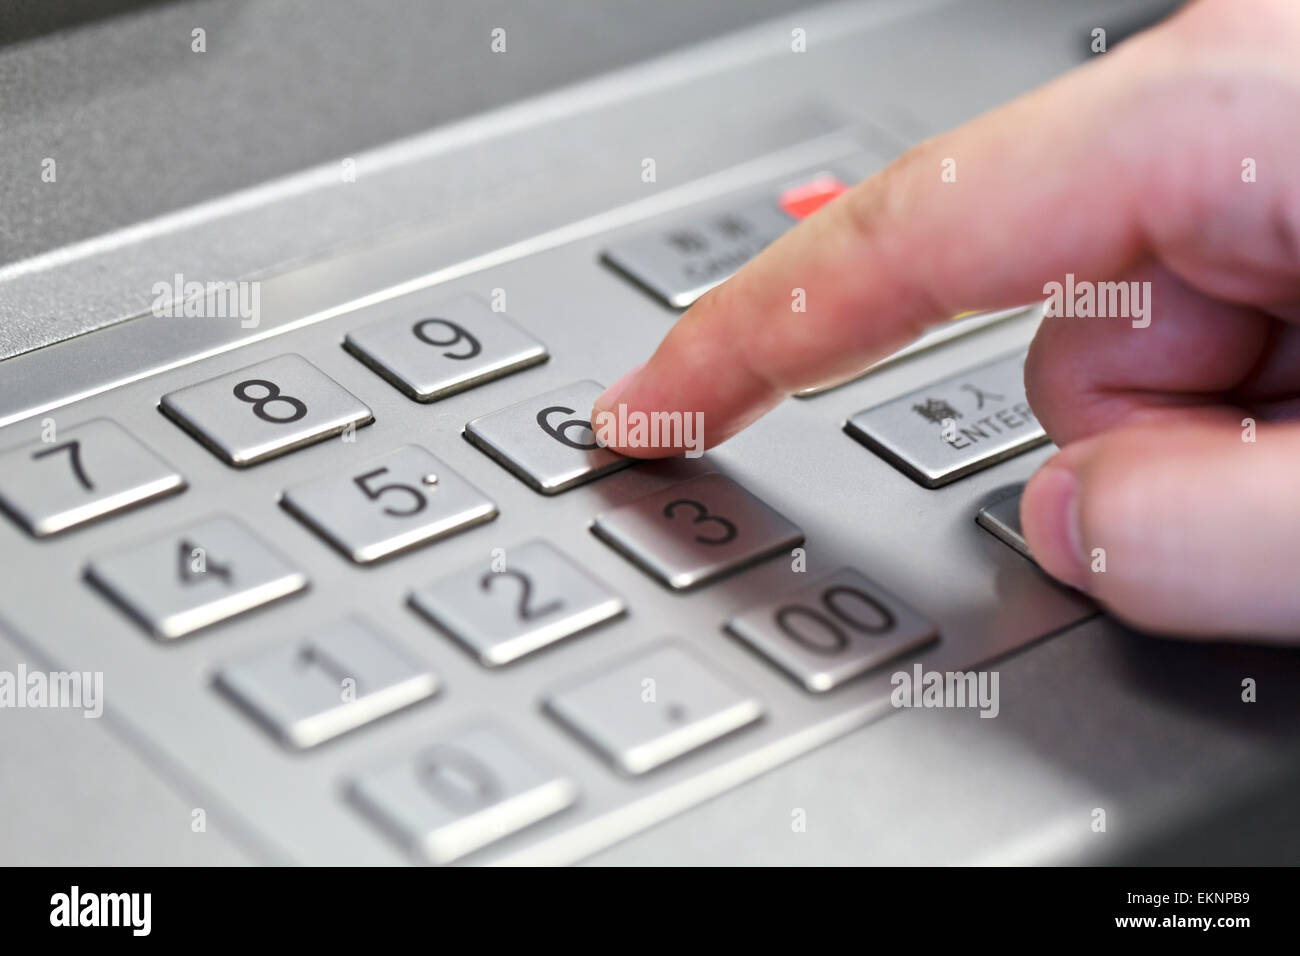 Human hand enter atm banking cash machine pin code Stock Photo